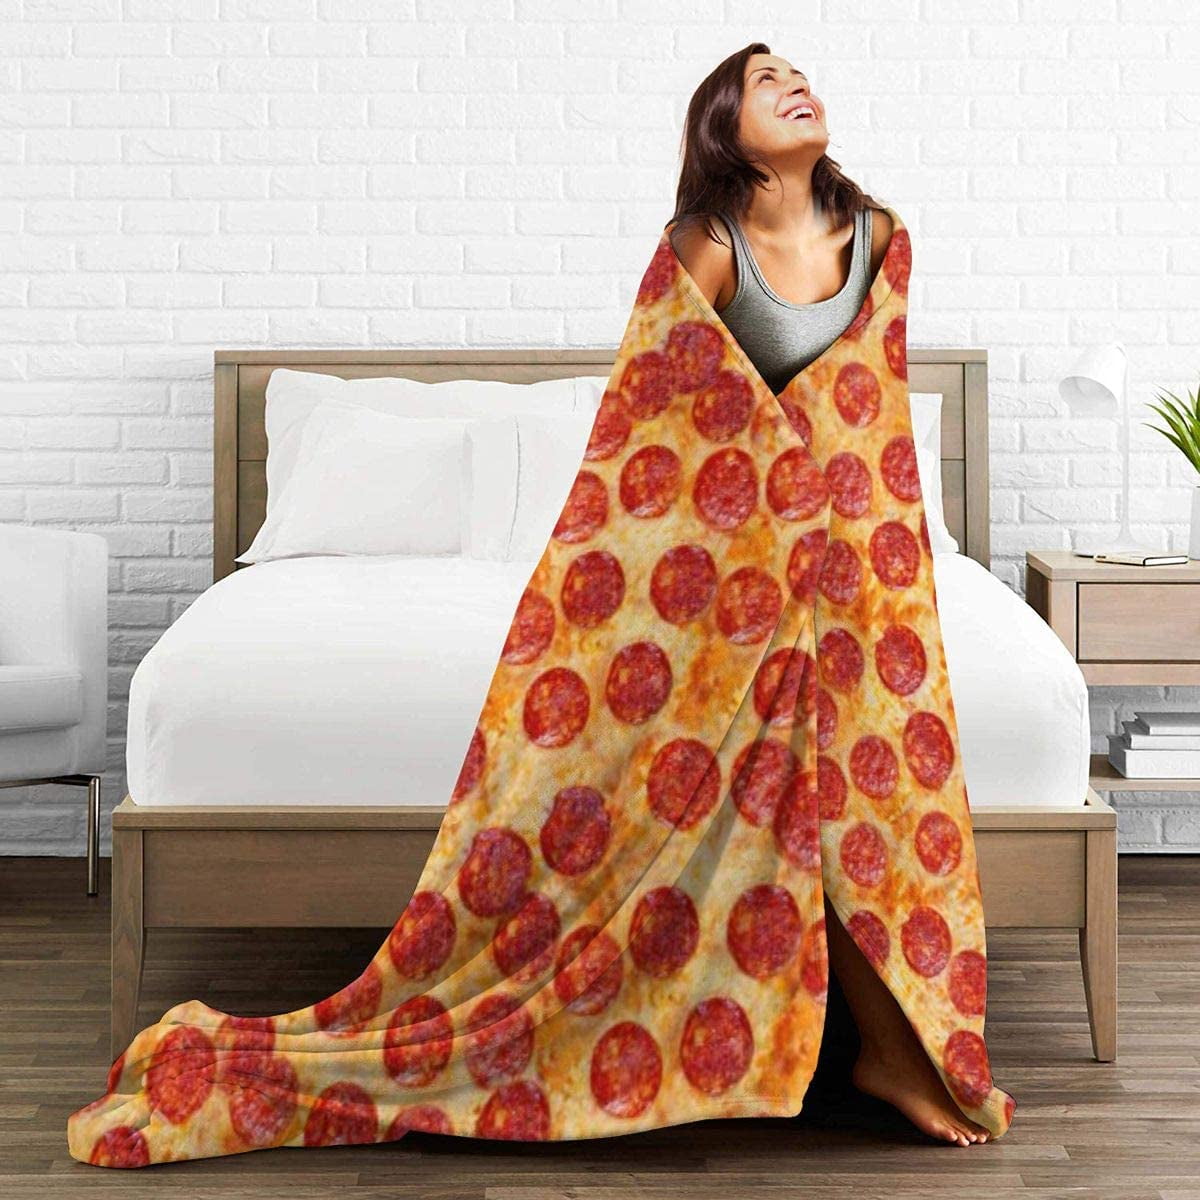 Pizza Donut ring blanket Soft warm flannel pizza blanket for bed fleece  sofa plaid plush bedspread Flannel pizza blanket - AliExpress